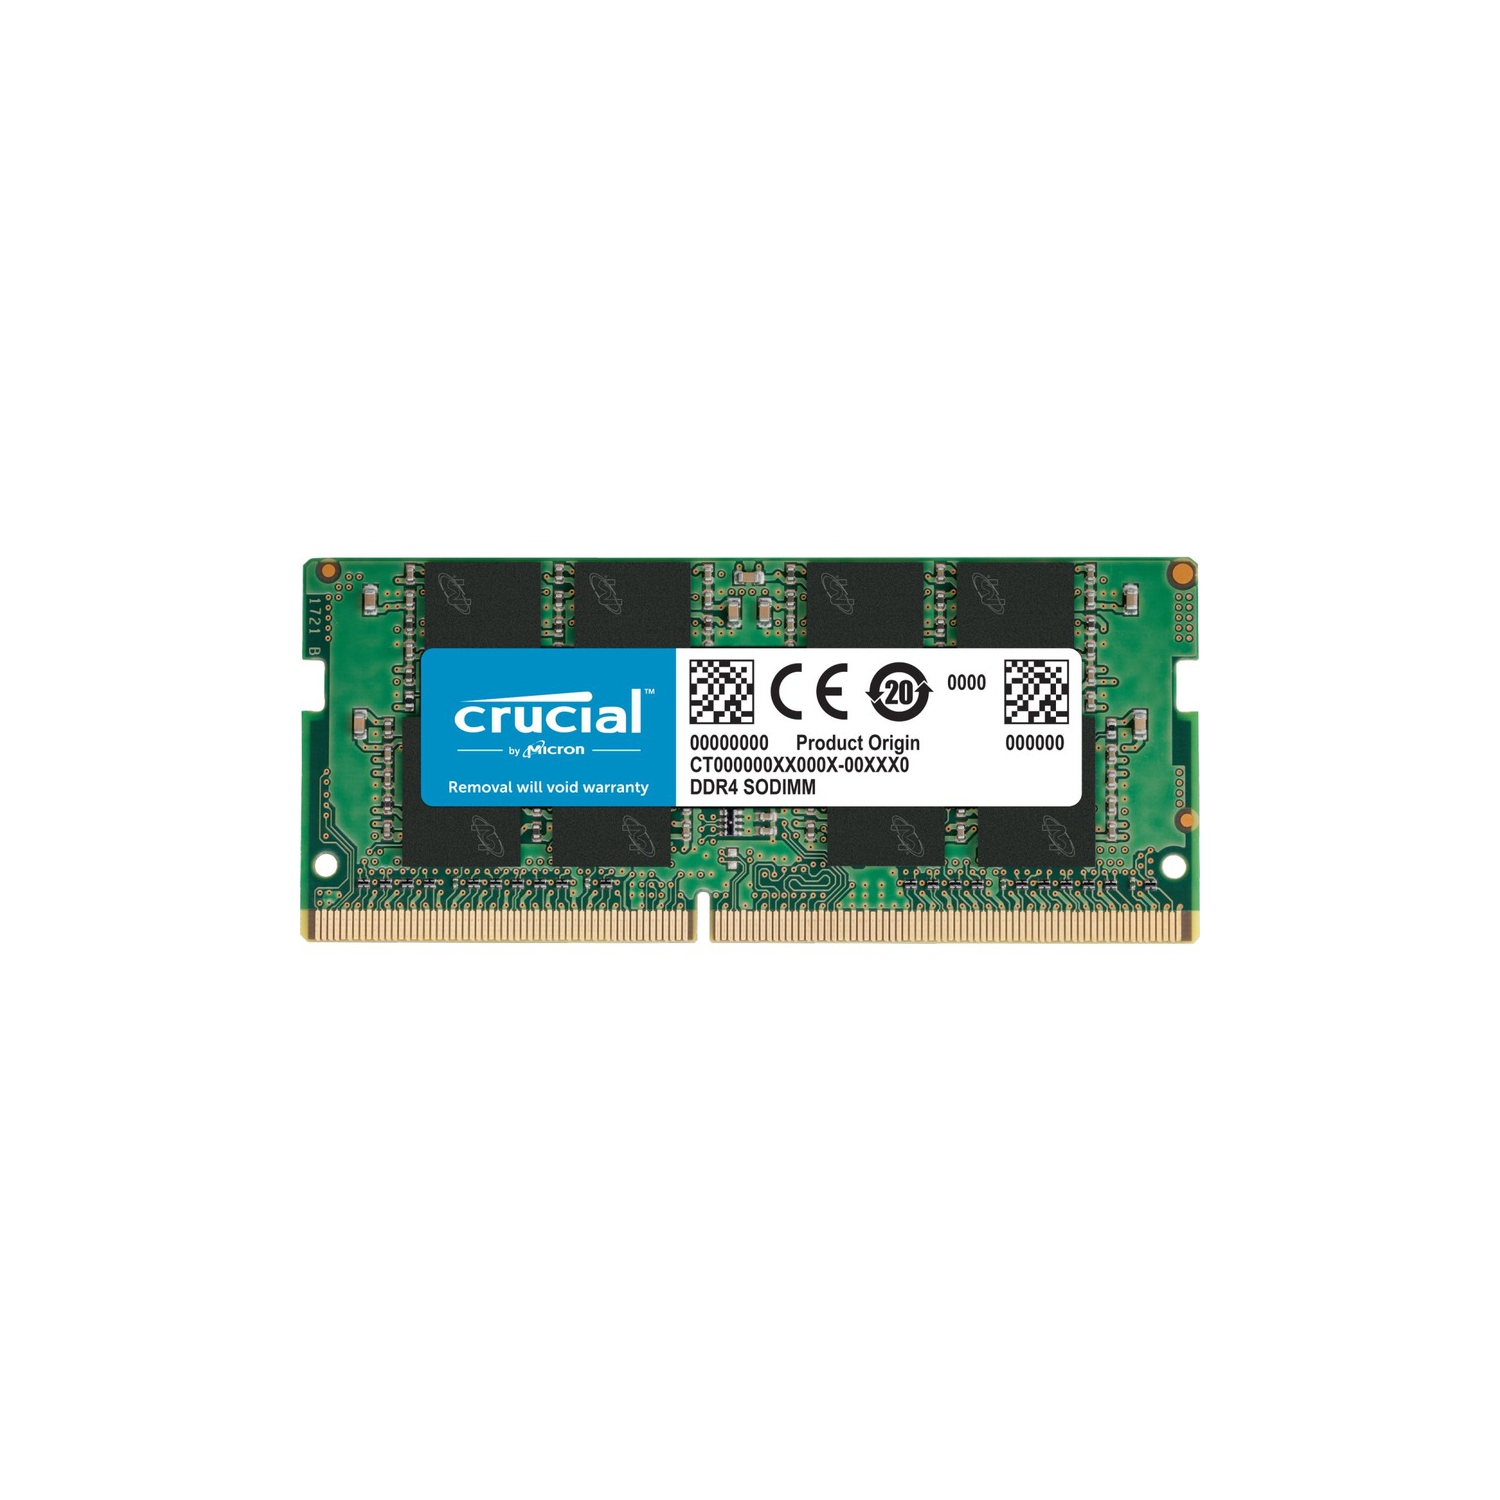 Crucial Memory CT16G4SFD824A 16GB DDR4 2400 SODIMM DRx8 Retail